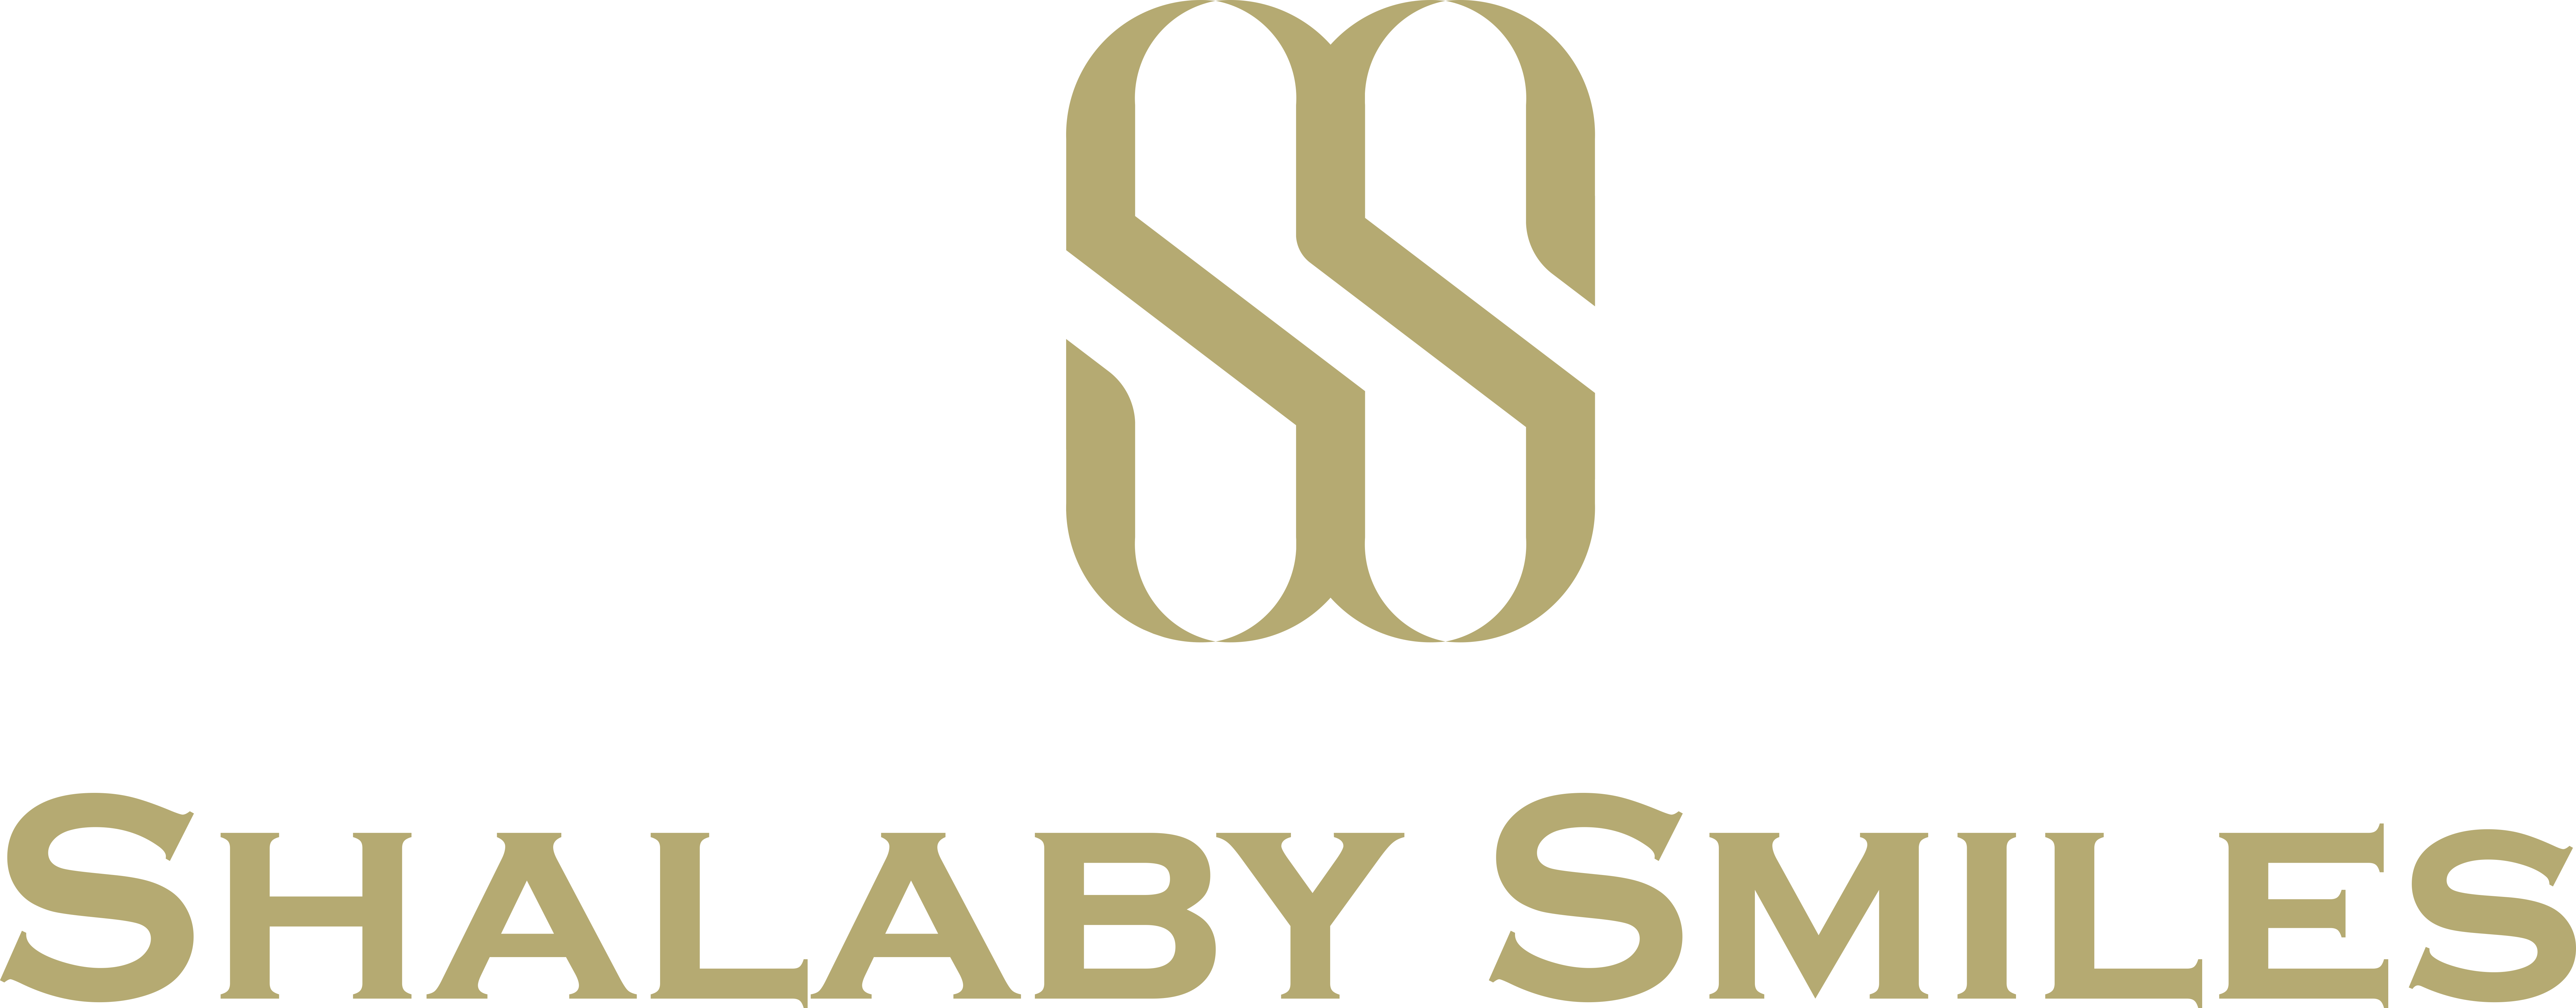 Shalaby Smiles logo